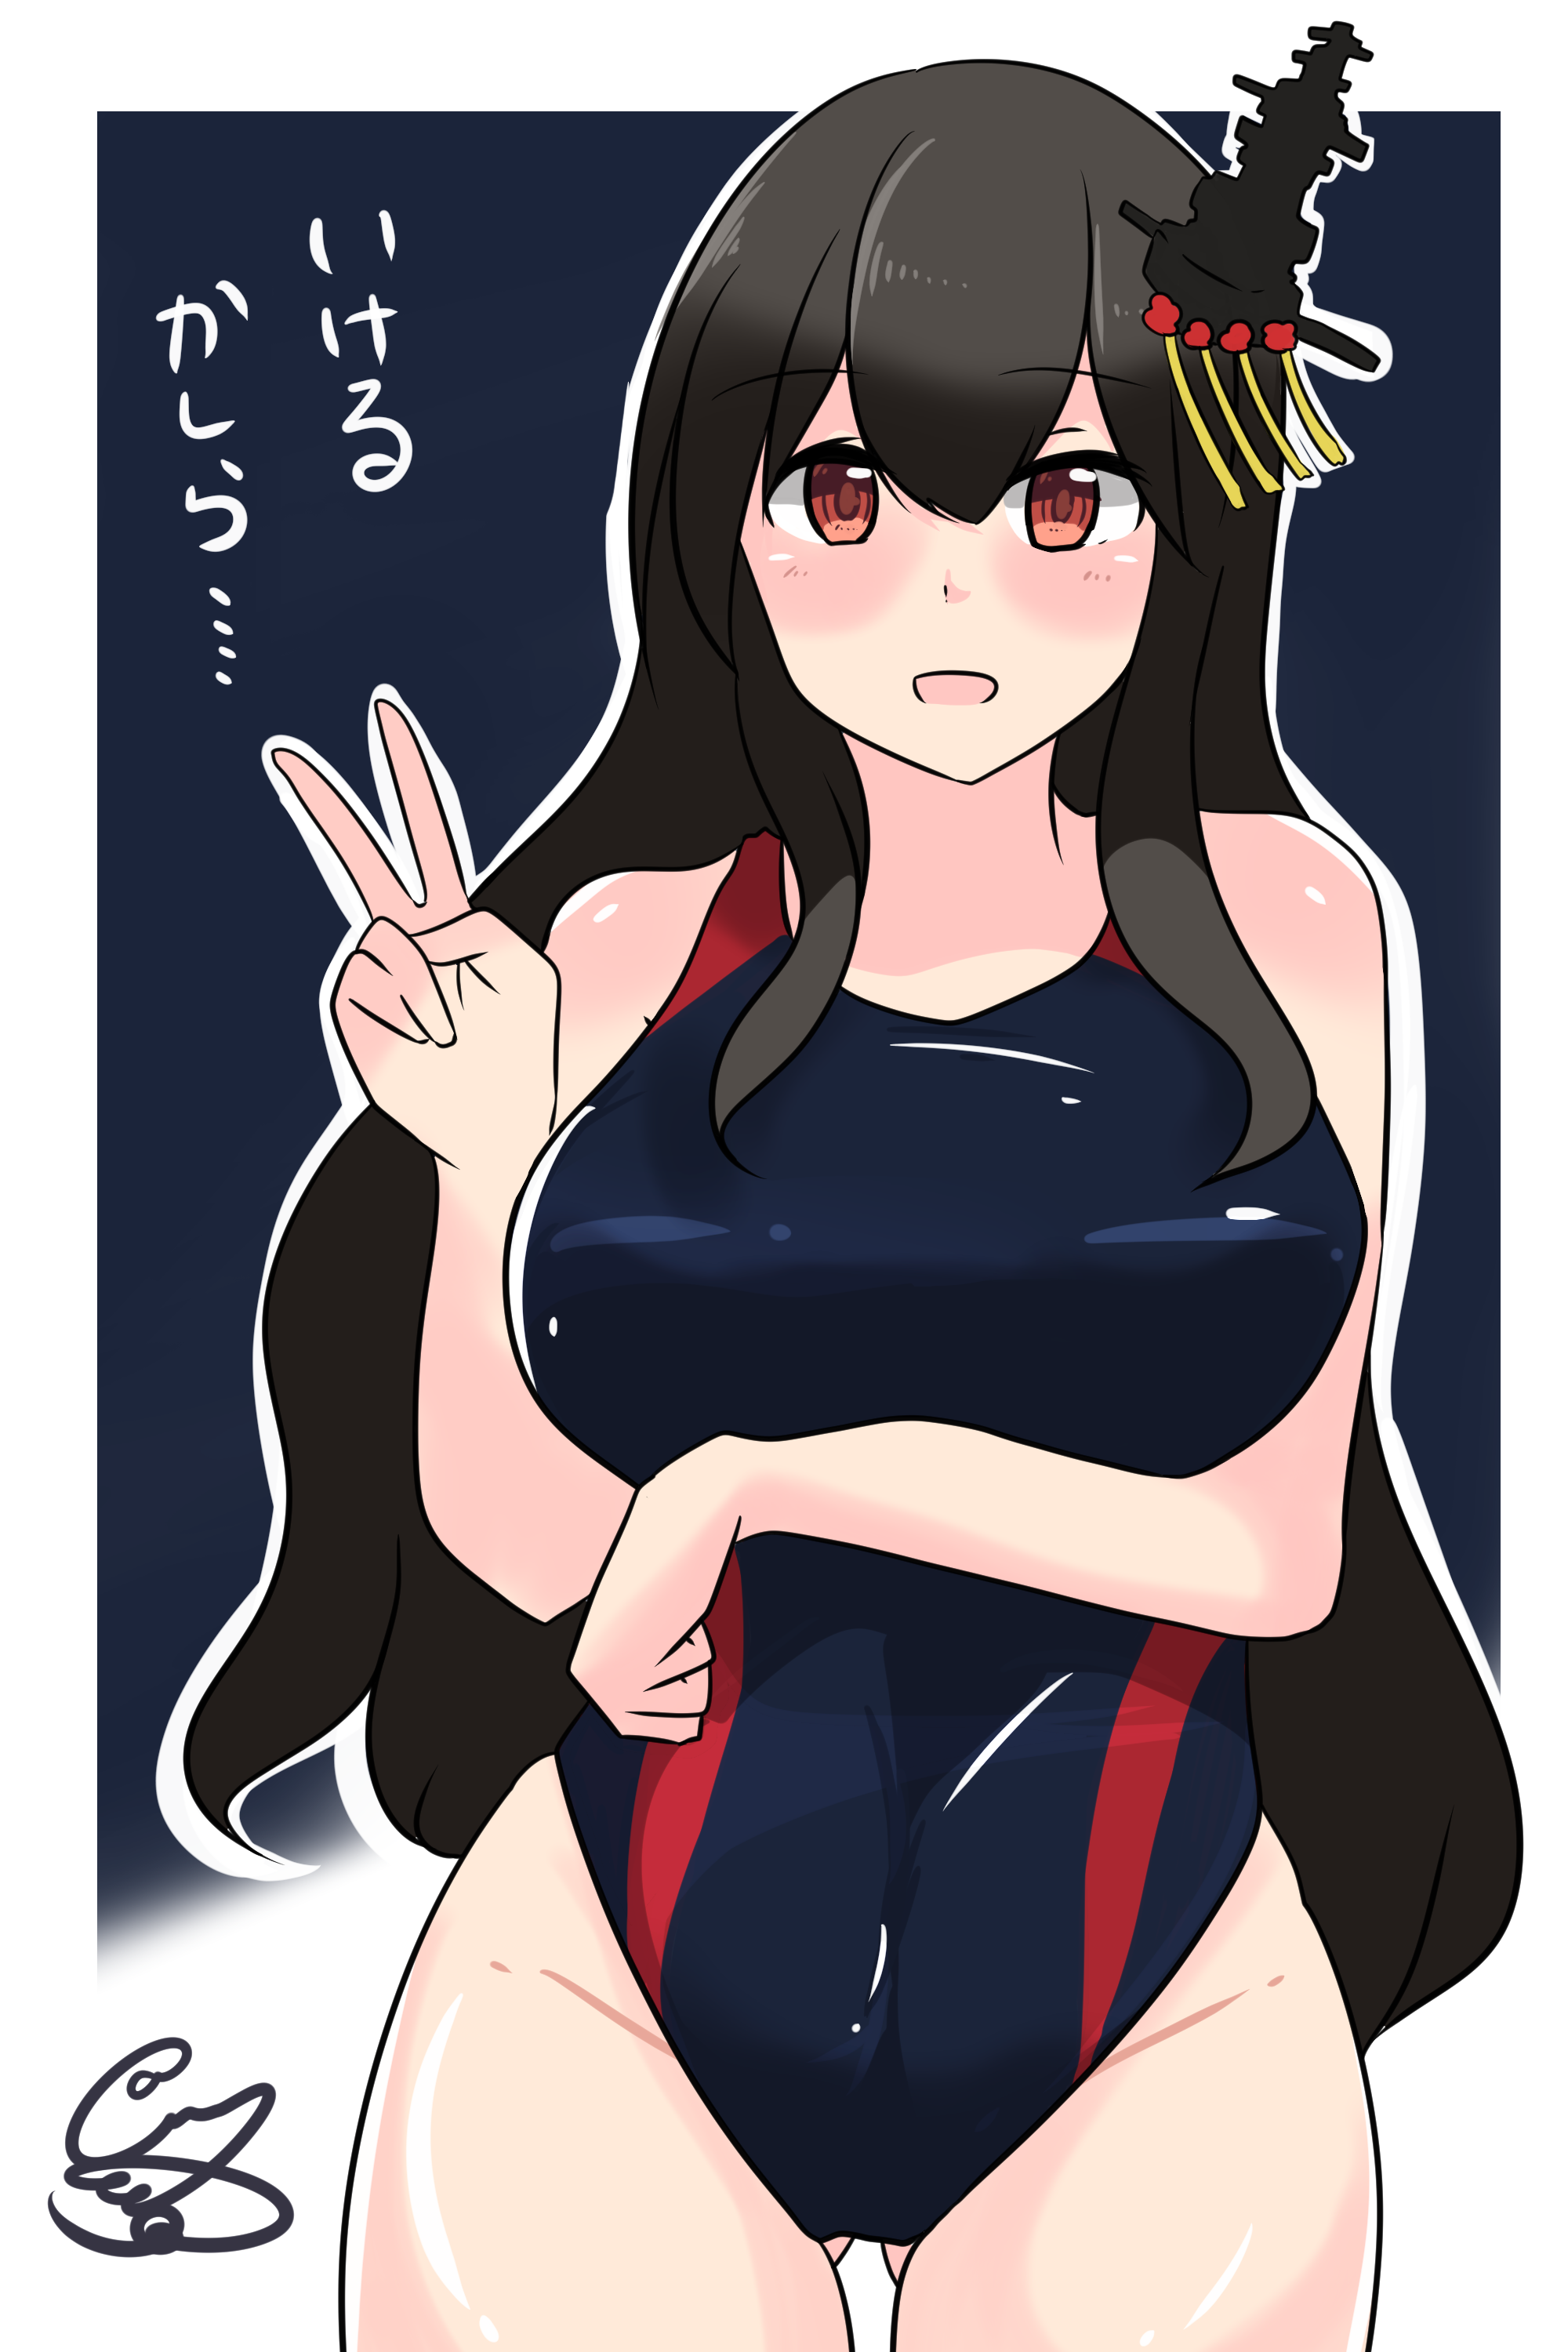 Anime 2000x3000 anime anime girls boobs big boobs swimwear long hair black hair artwork digital art fan art Kantai Collection Fusou (KanColle)